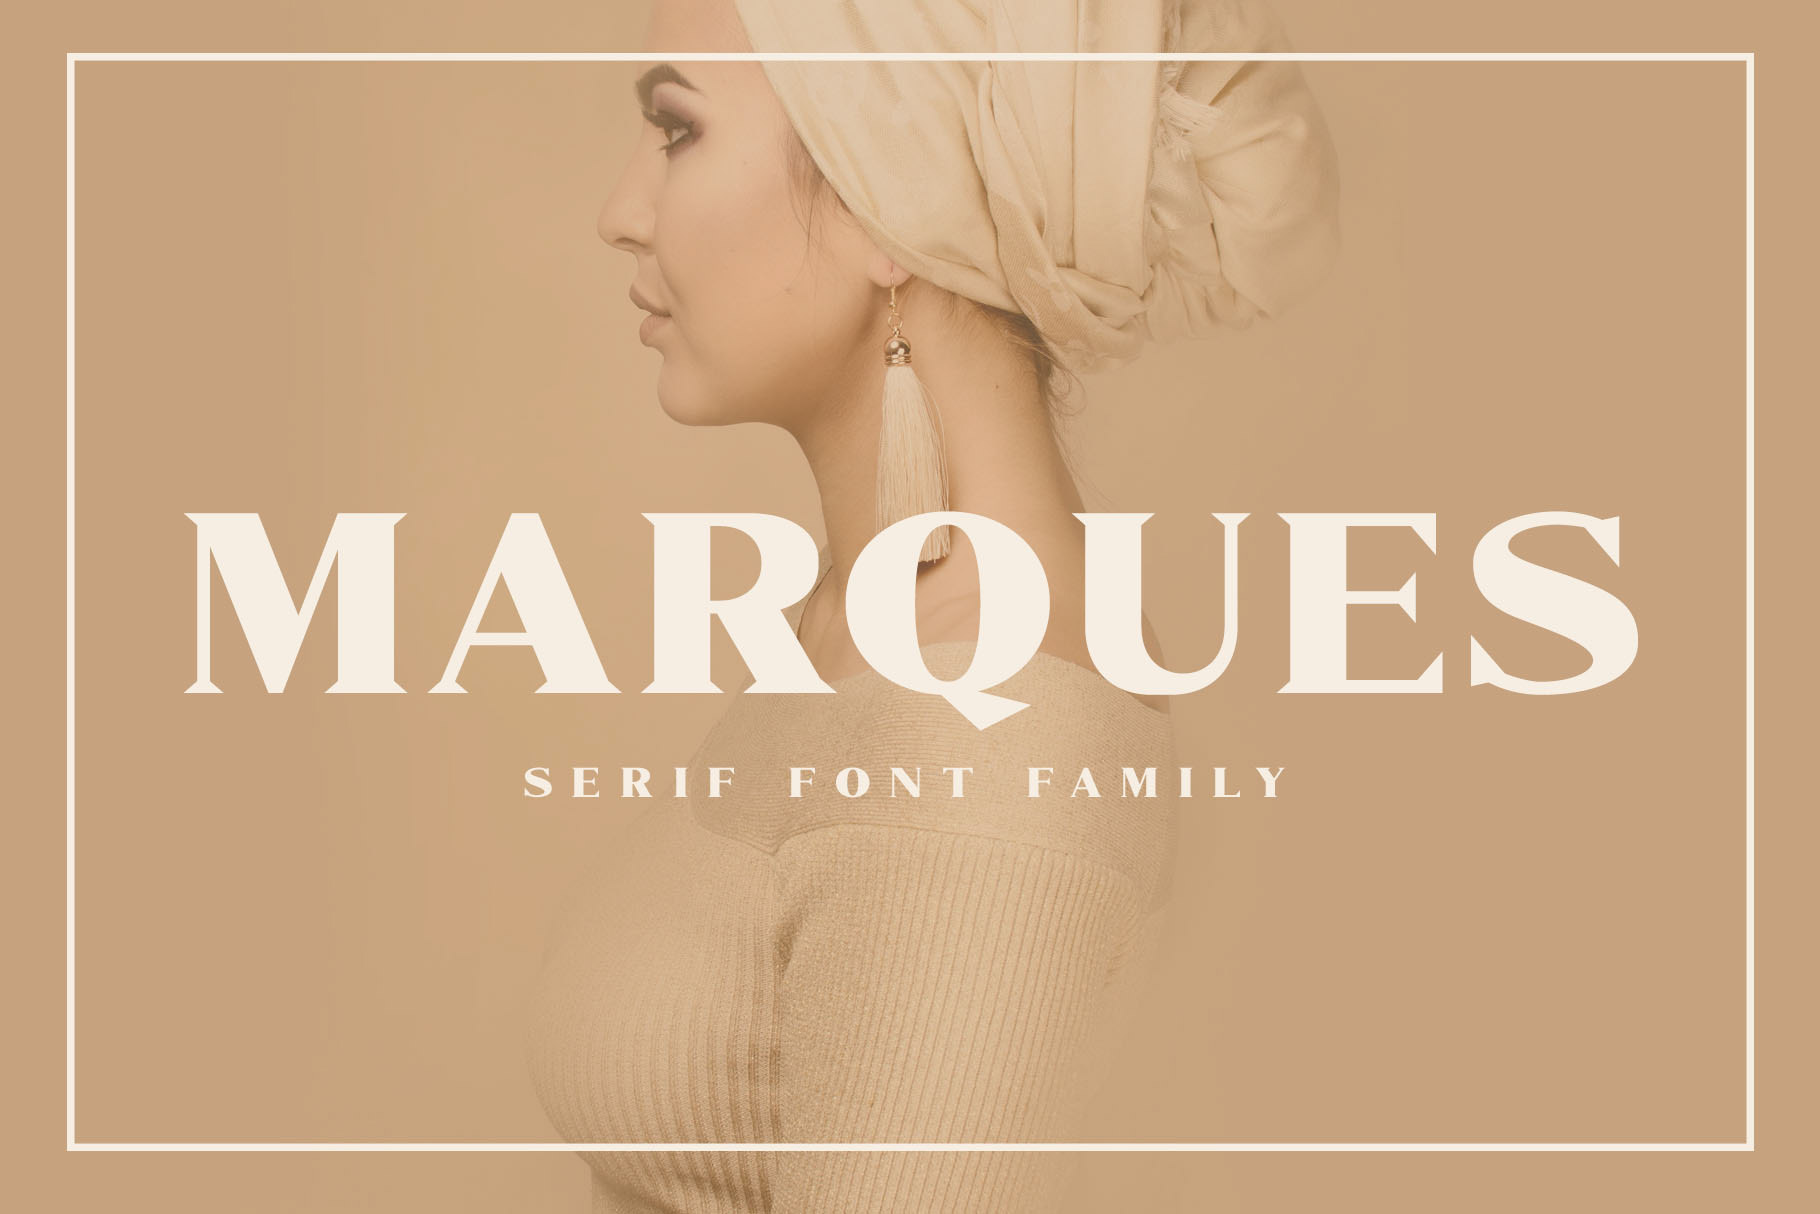 Marques Free Serif Font Family - serif